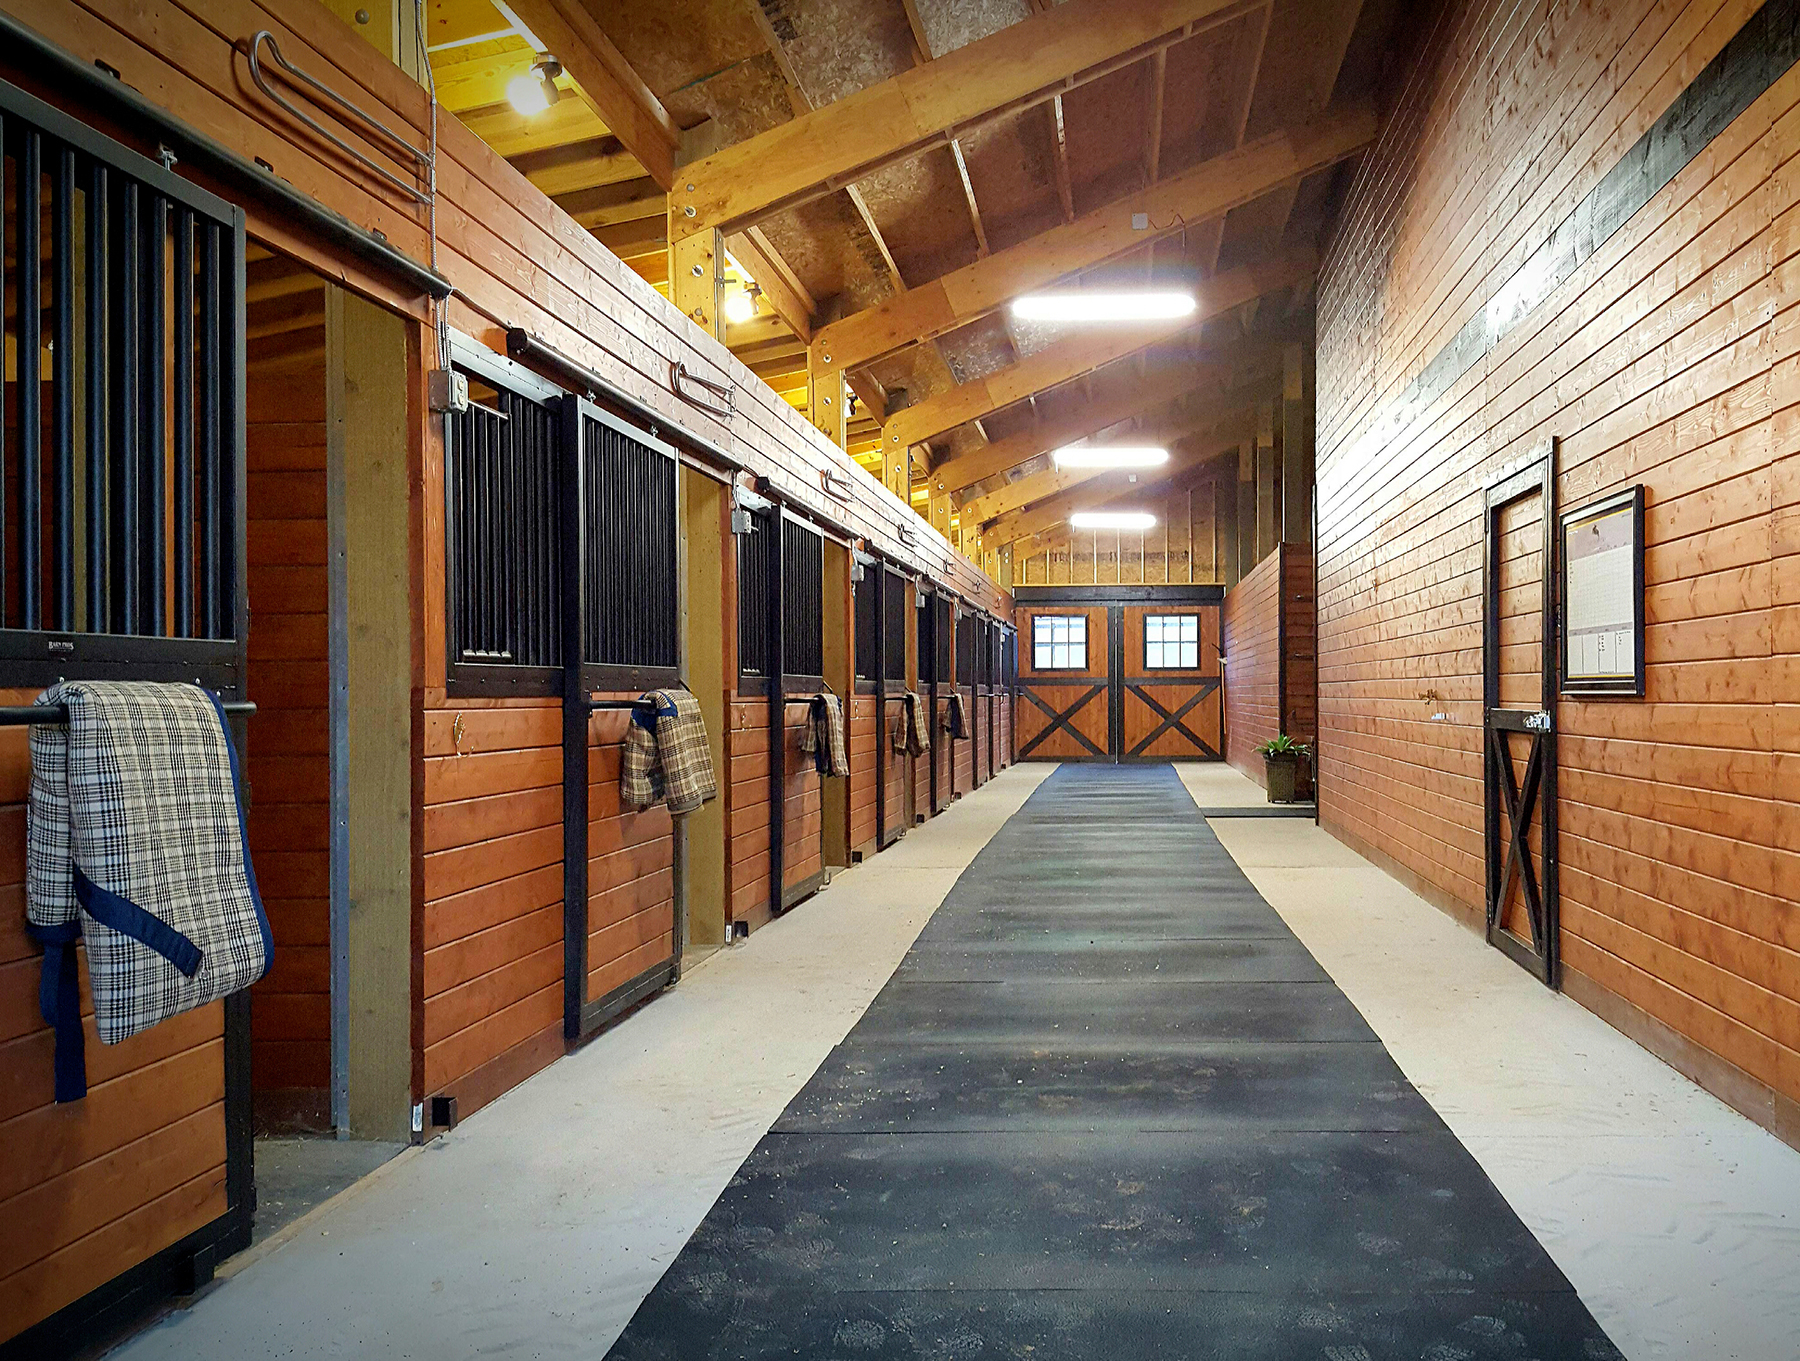 Как называется конюшня. Конюшня Голден Хорс изнутри. Конюшни Westphalian stables архитектура. Конюшня Adelon stables. Конюшня Solana stables.